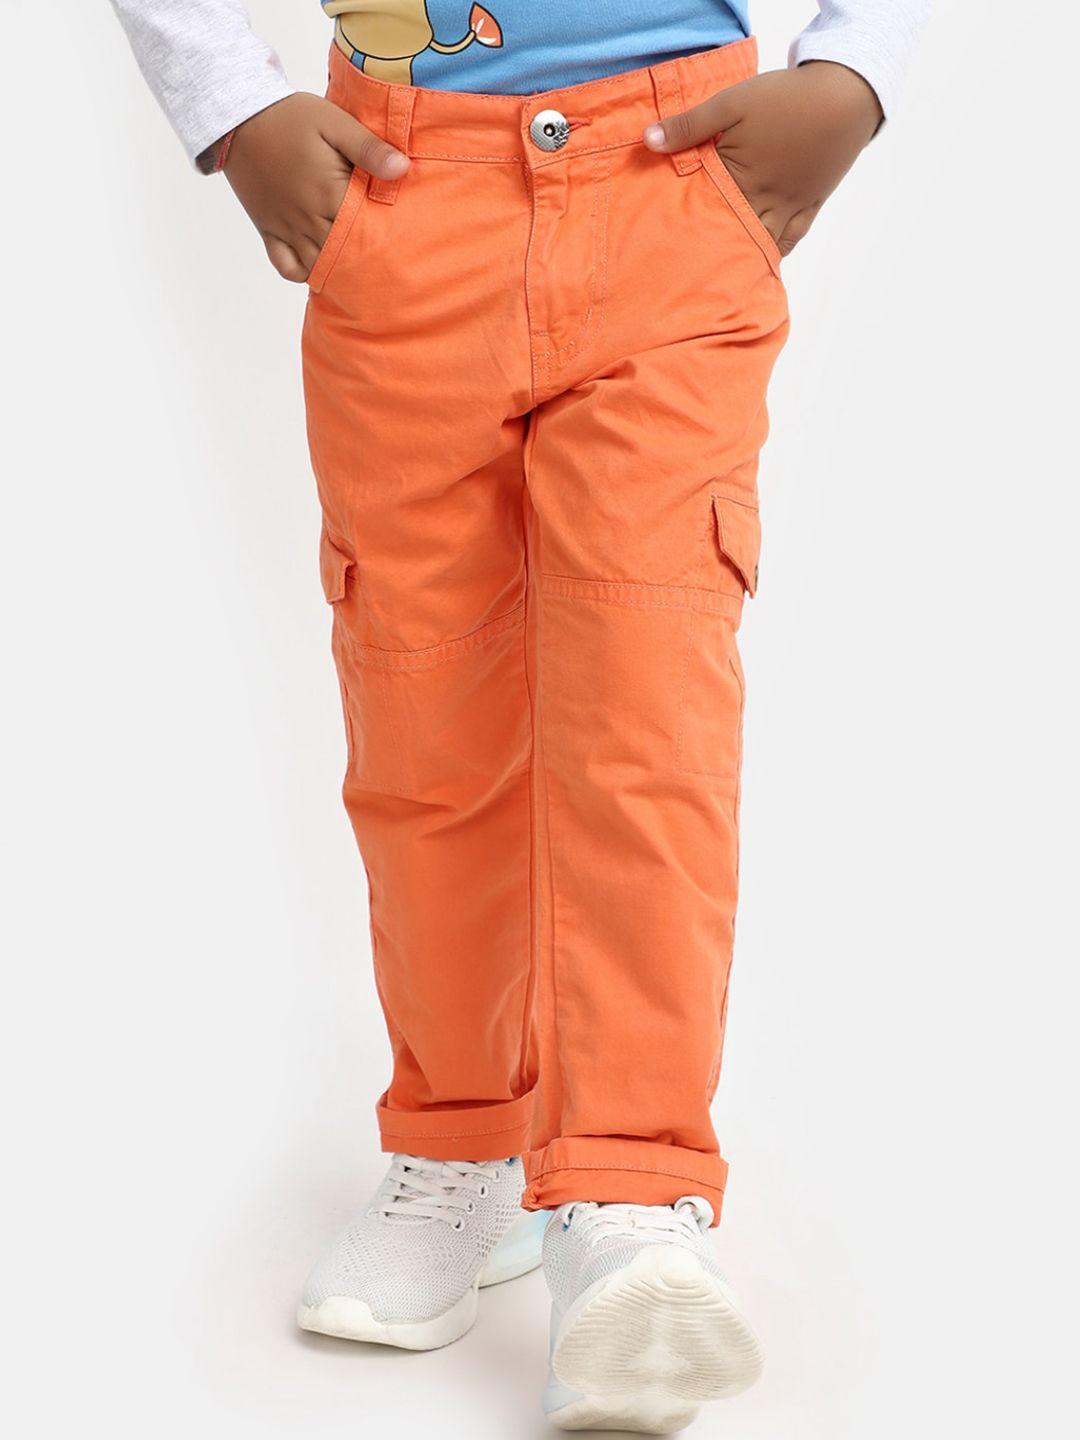 v-mart boys orange mid-rise cargos trousers